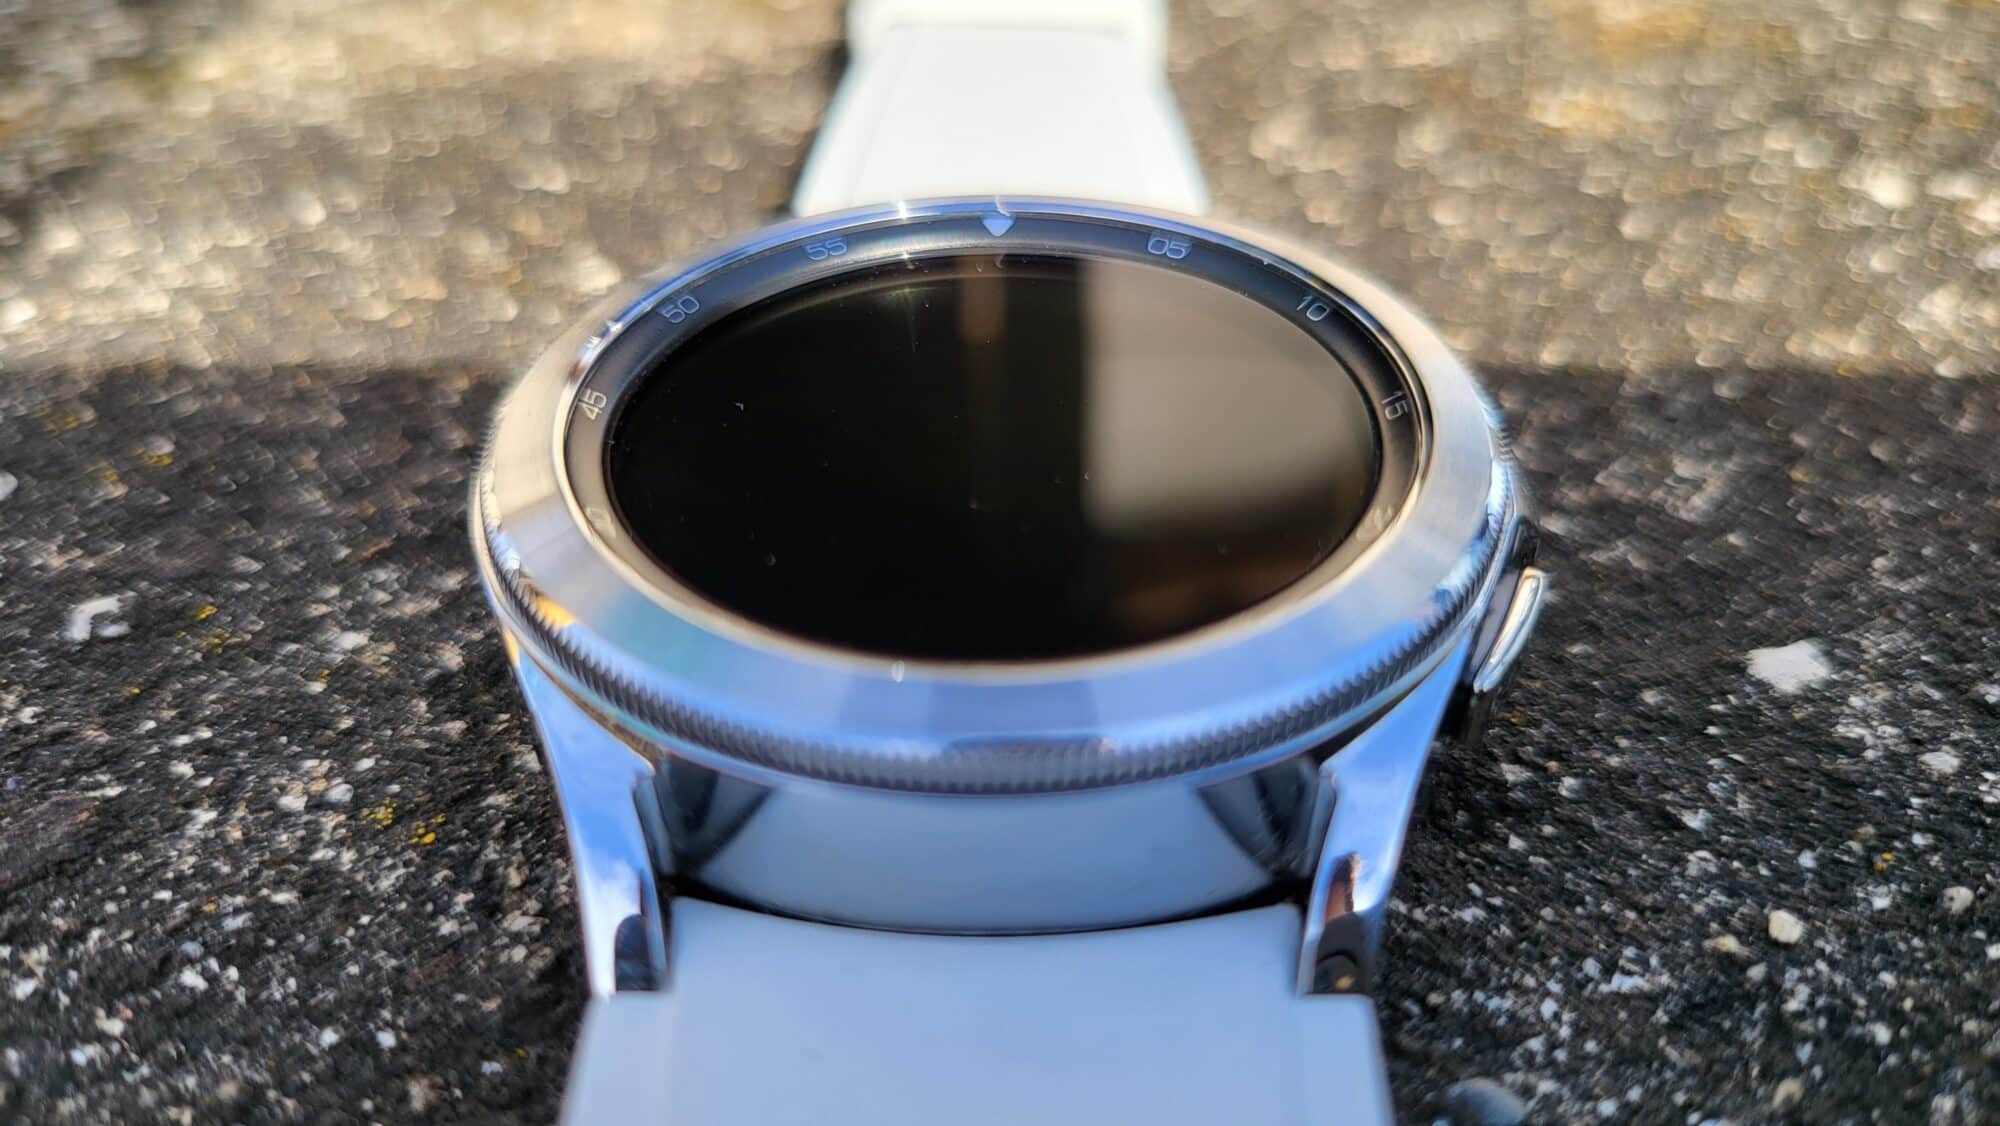 Test – Samsung Galaxy Watch 4 Classic : déjà un must-have Samsung